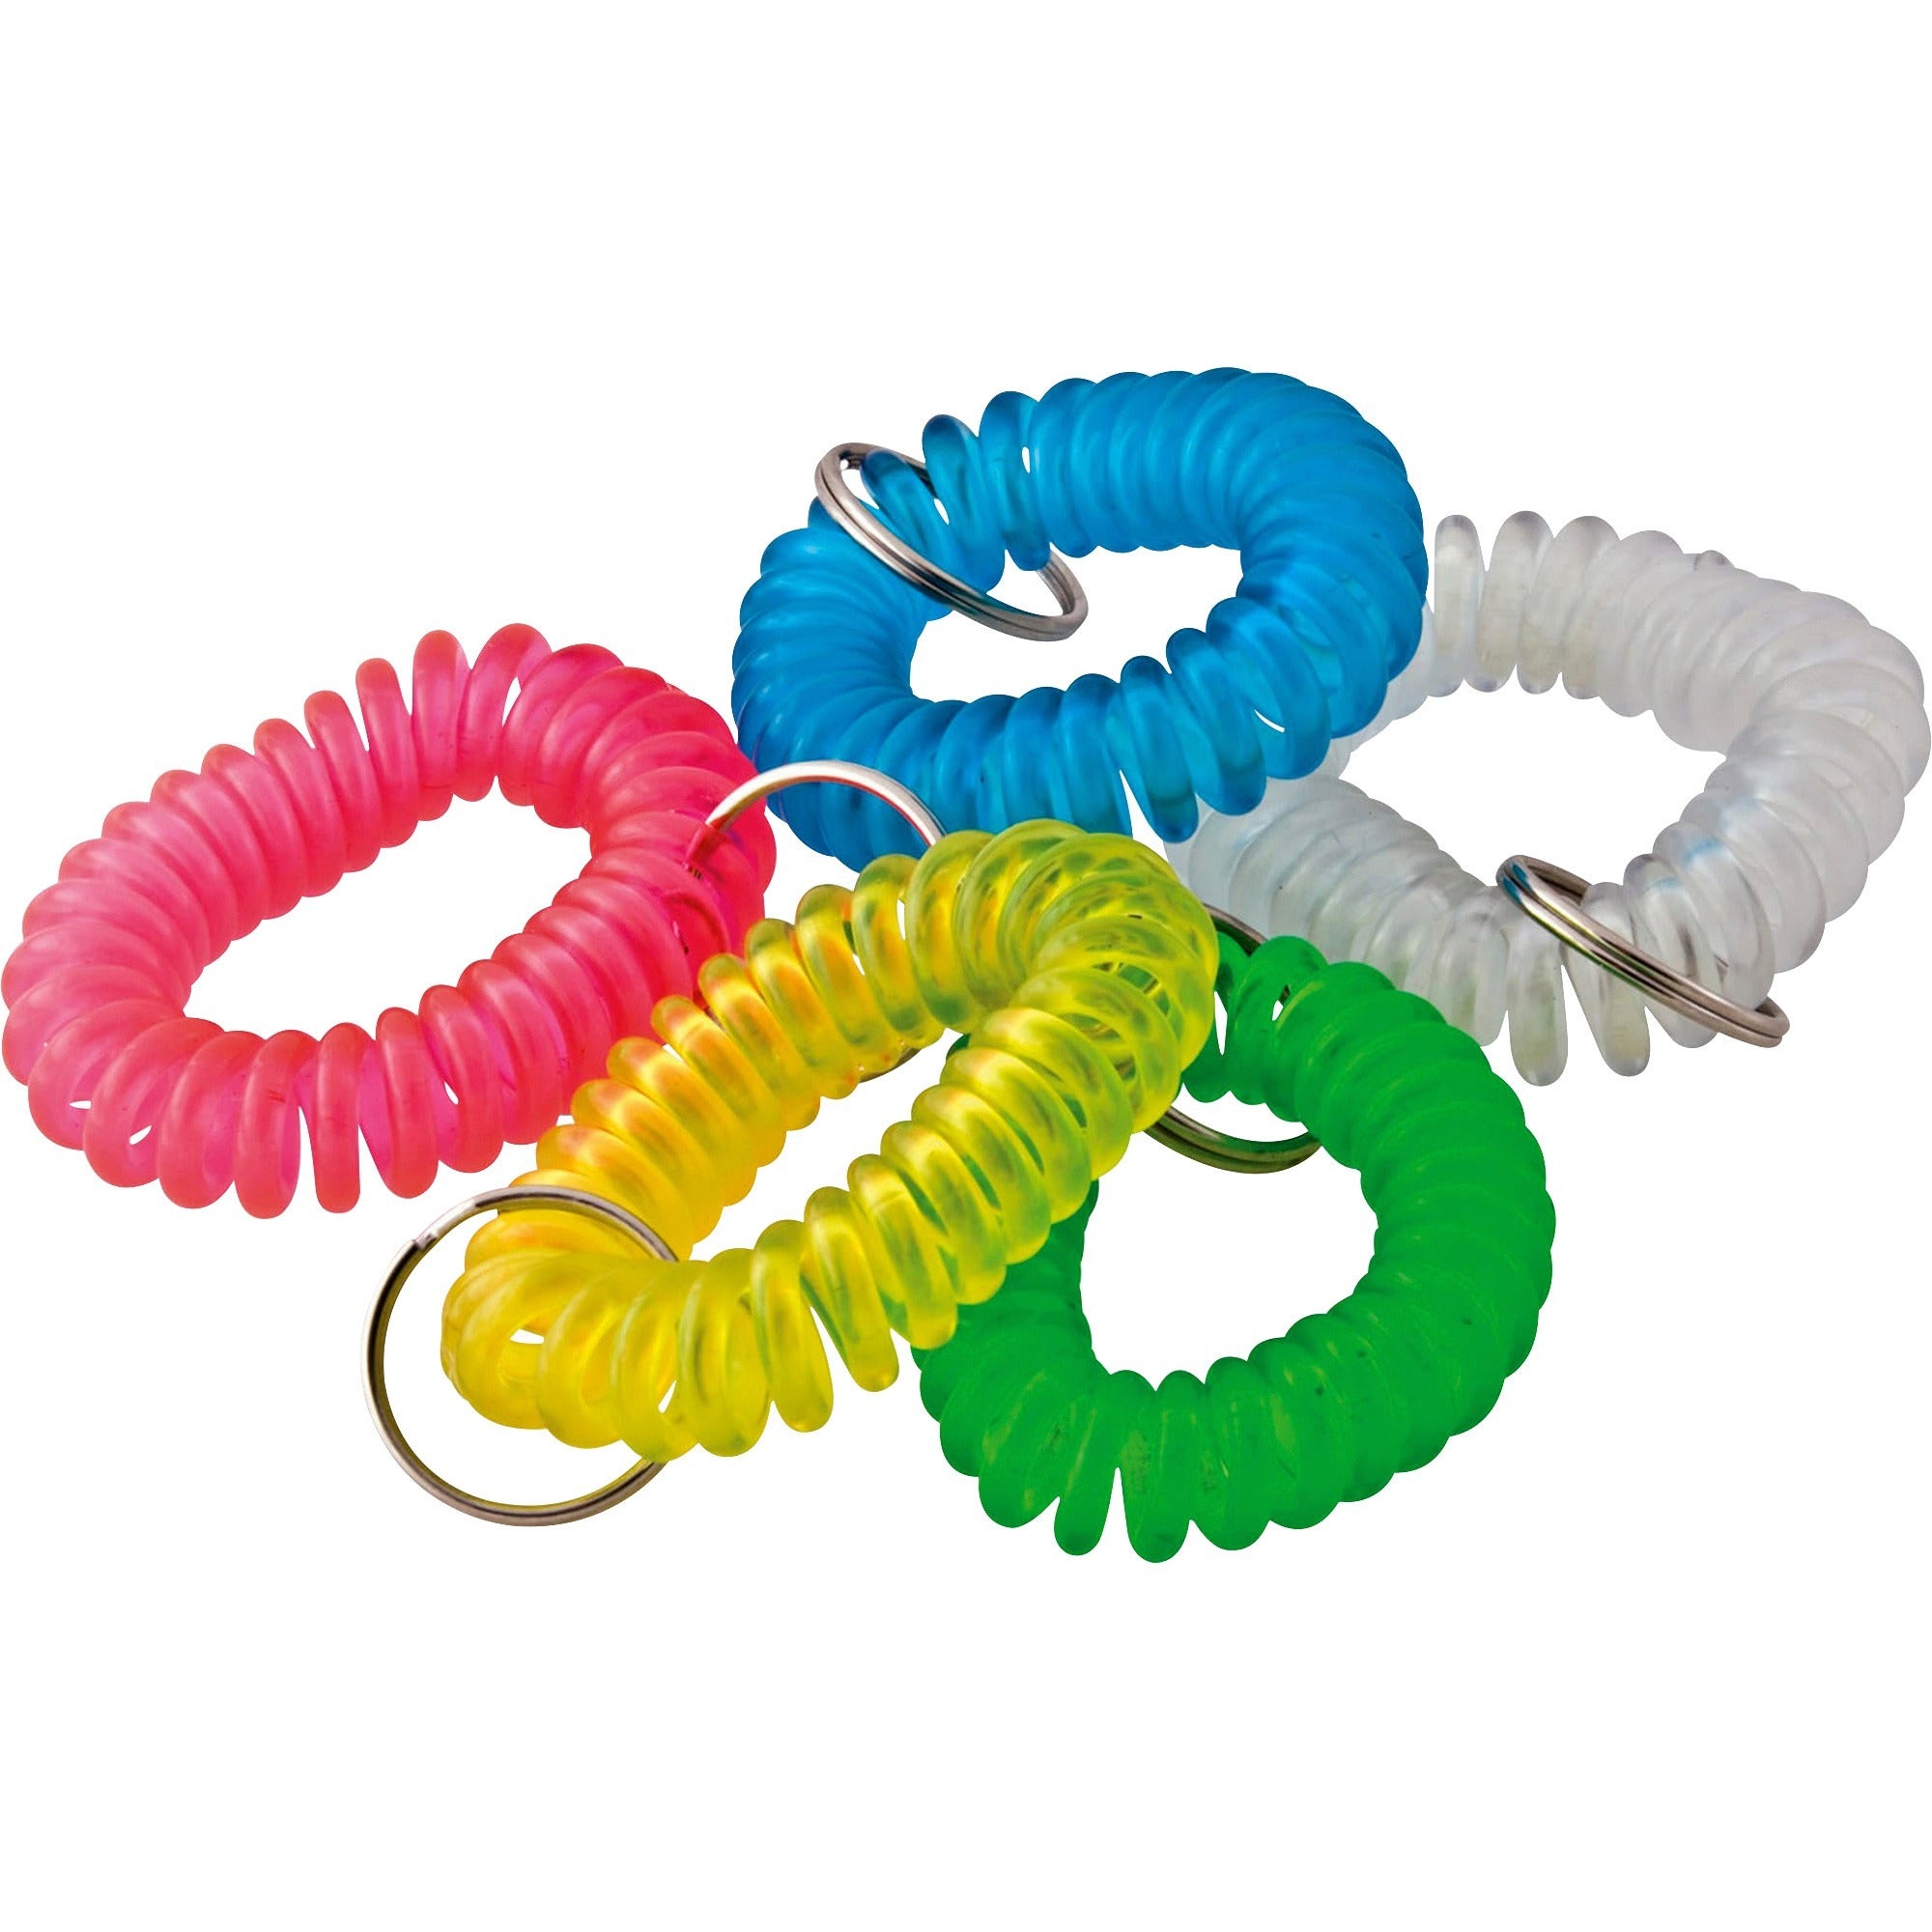 Baumgartens Plastic Wrist Coil Key Chains - 1 Each - Assorted - 